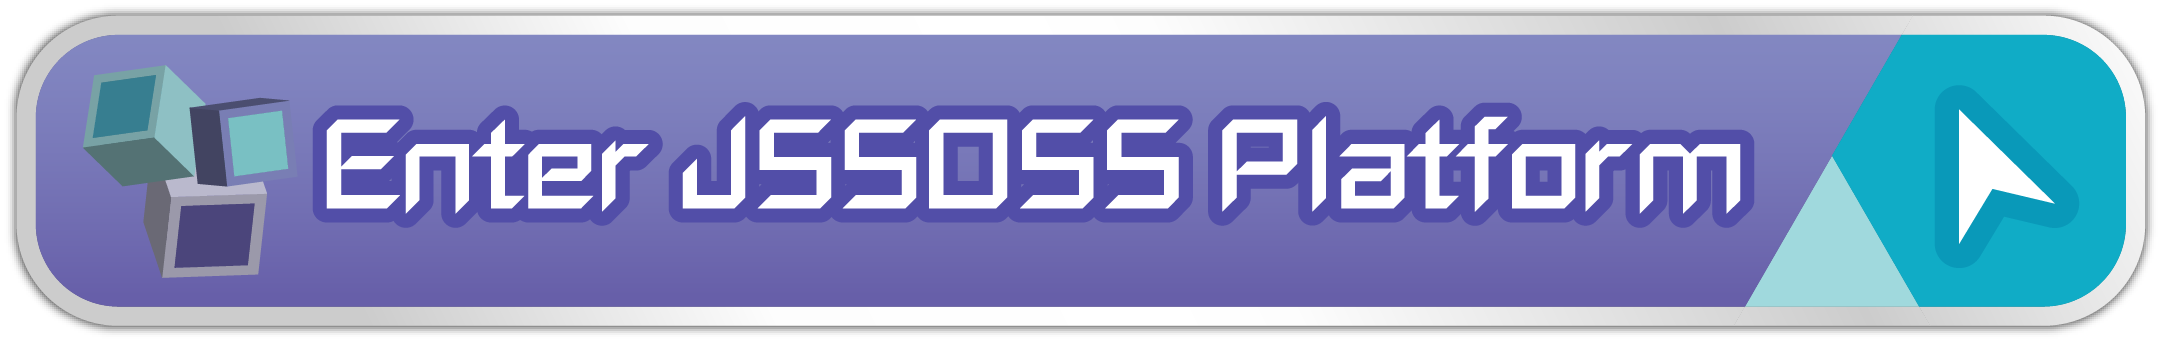 Enter JSSOSS Platform